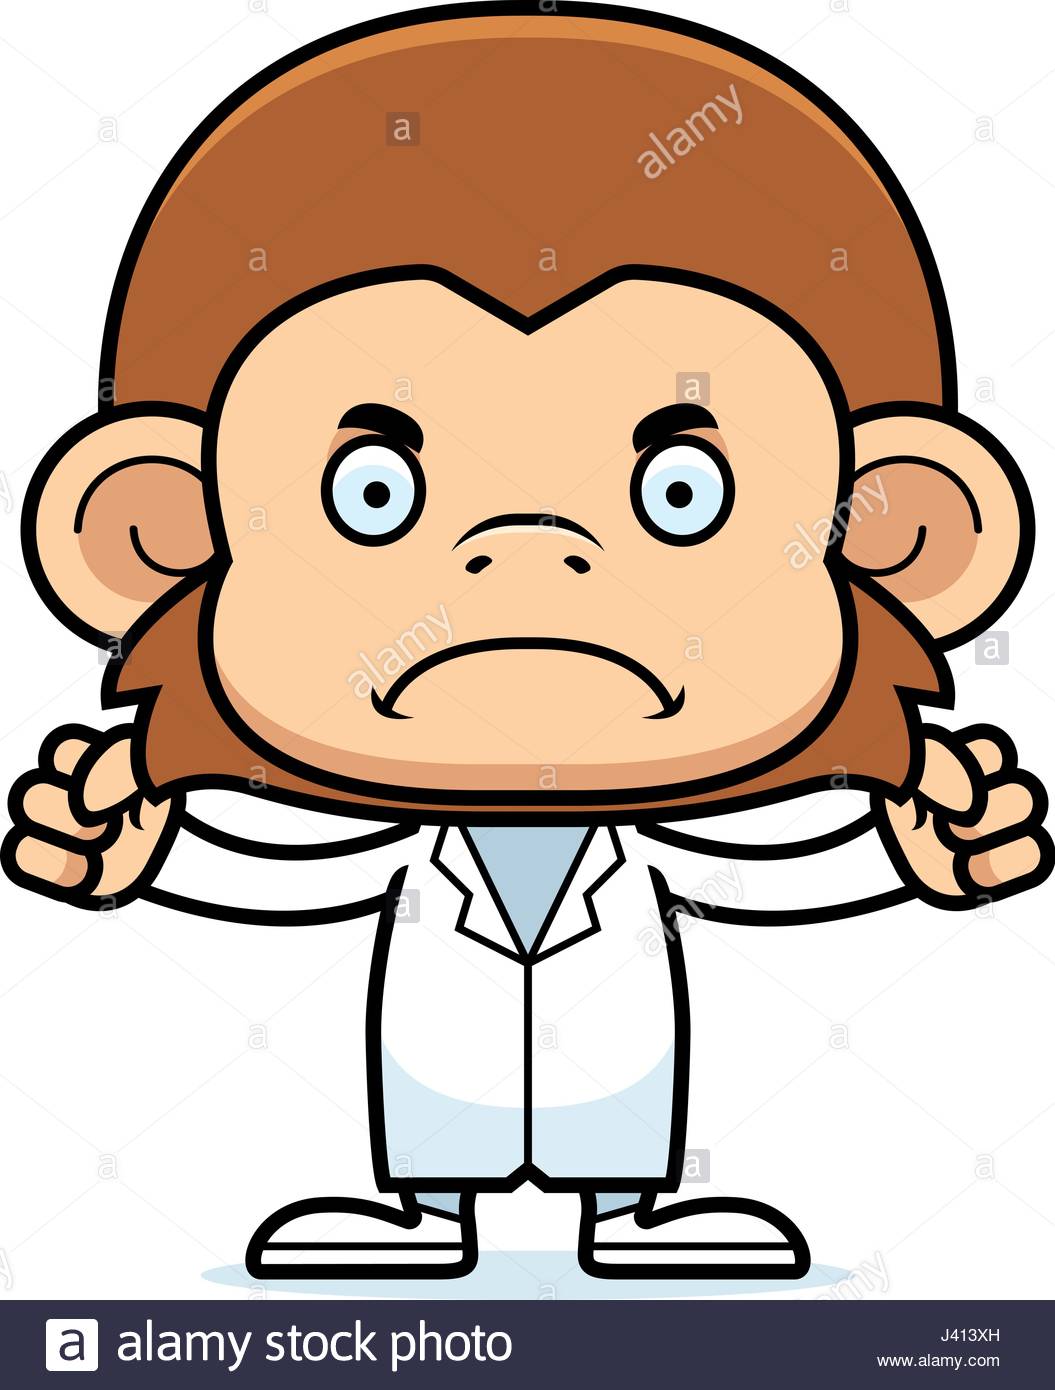 monkey clipart doctor